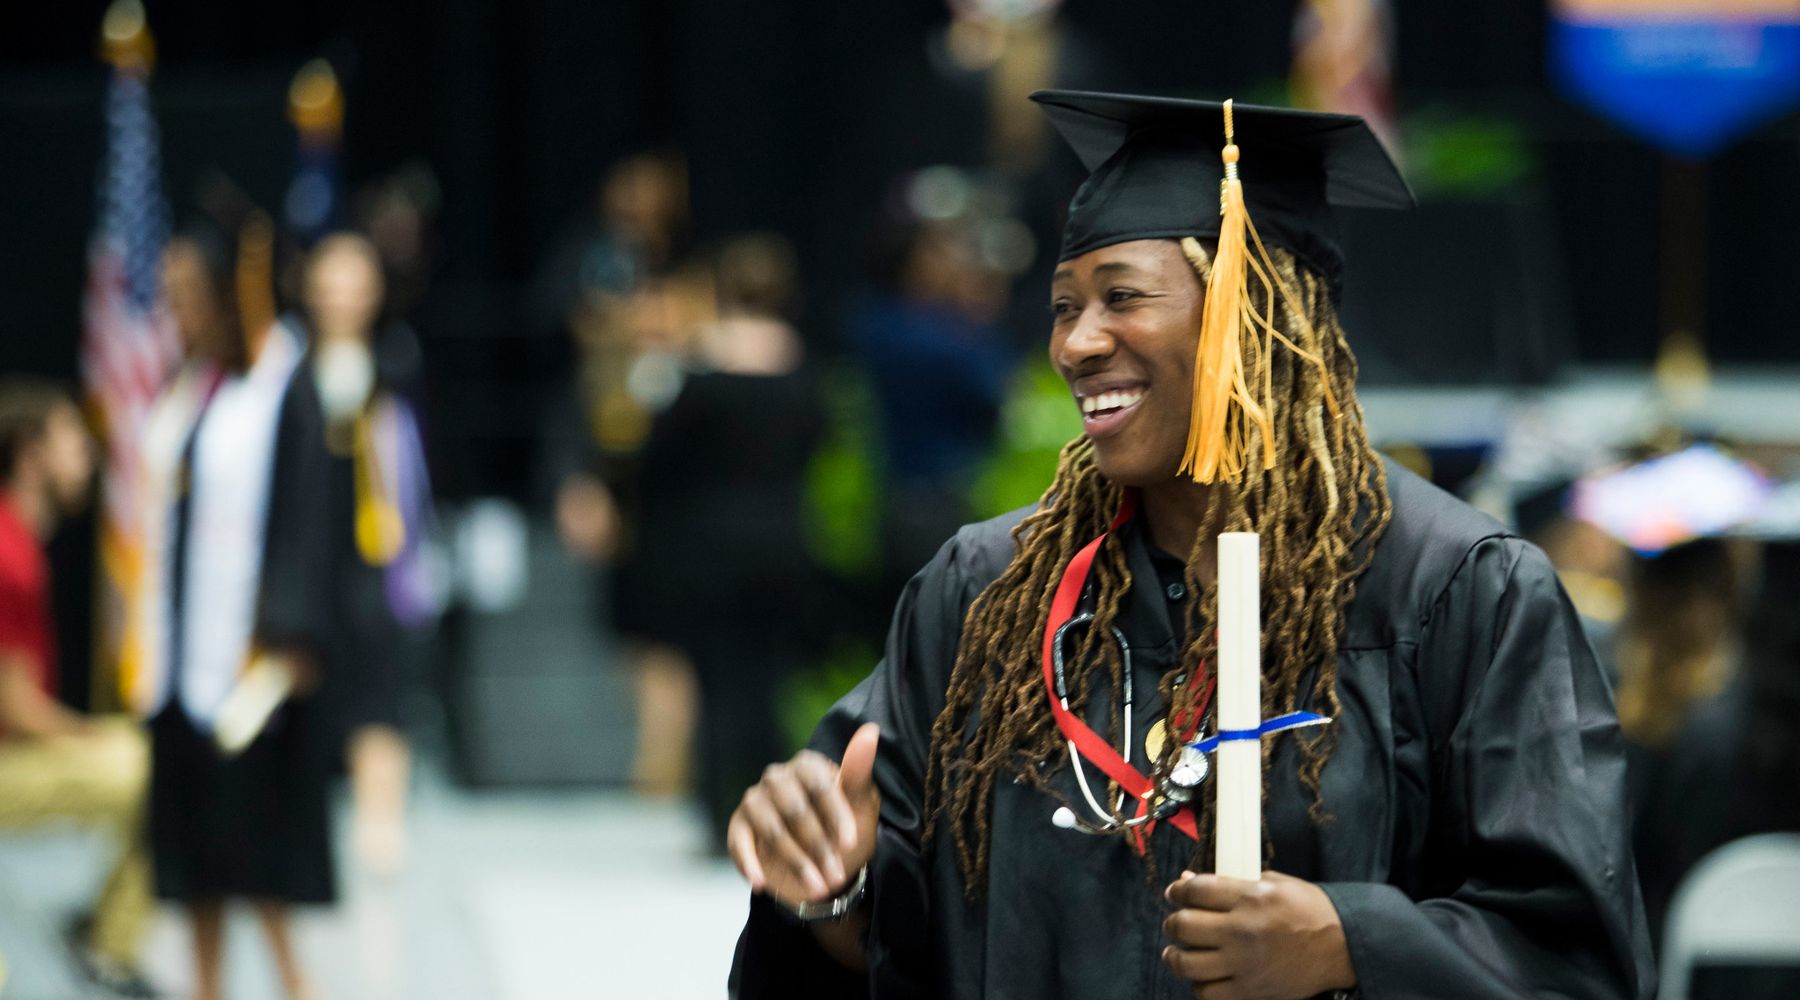 UWG student graduating